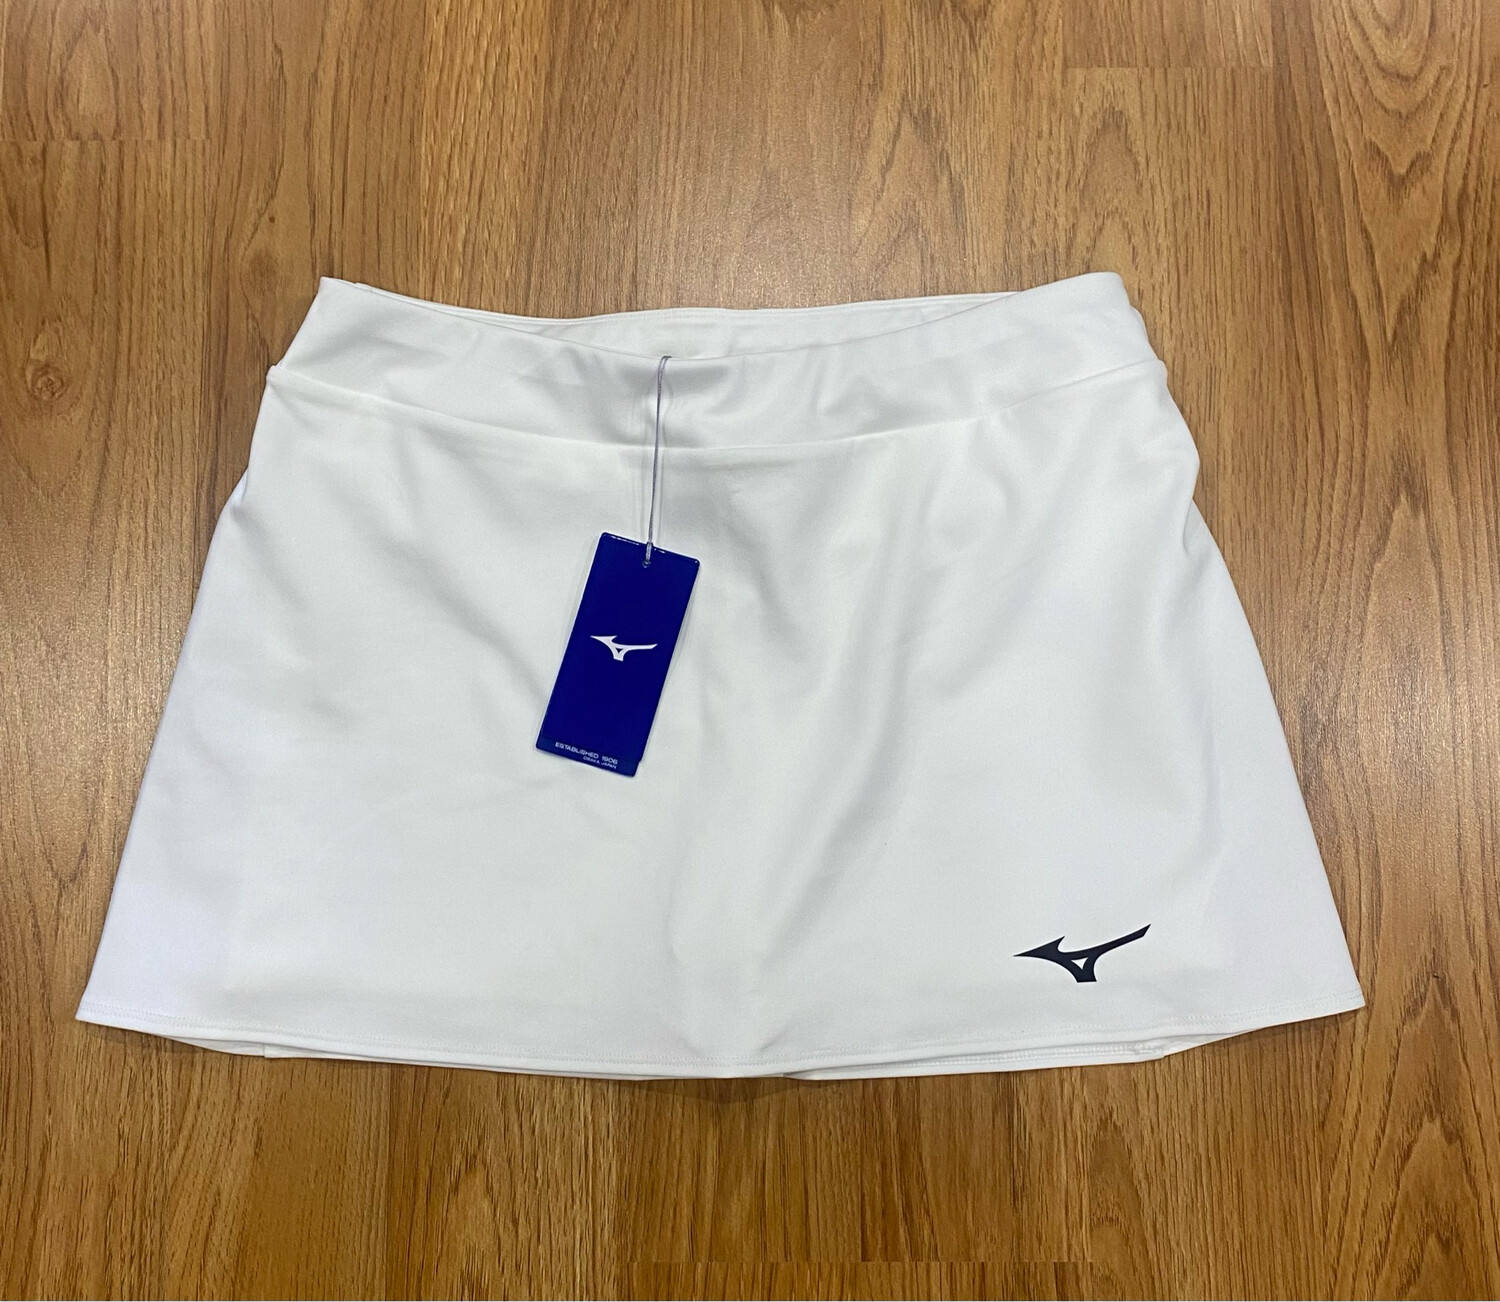 Mizuno Flex Tennis Skort White Skirt Size Medium (New With tags) (EC1690)